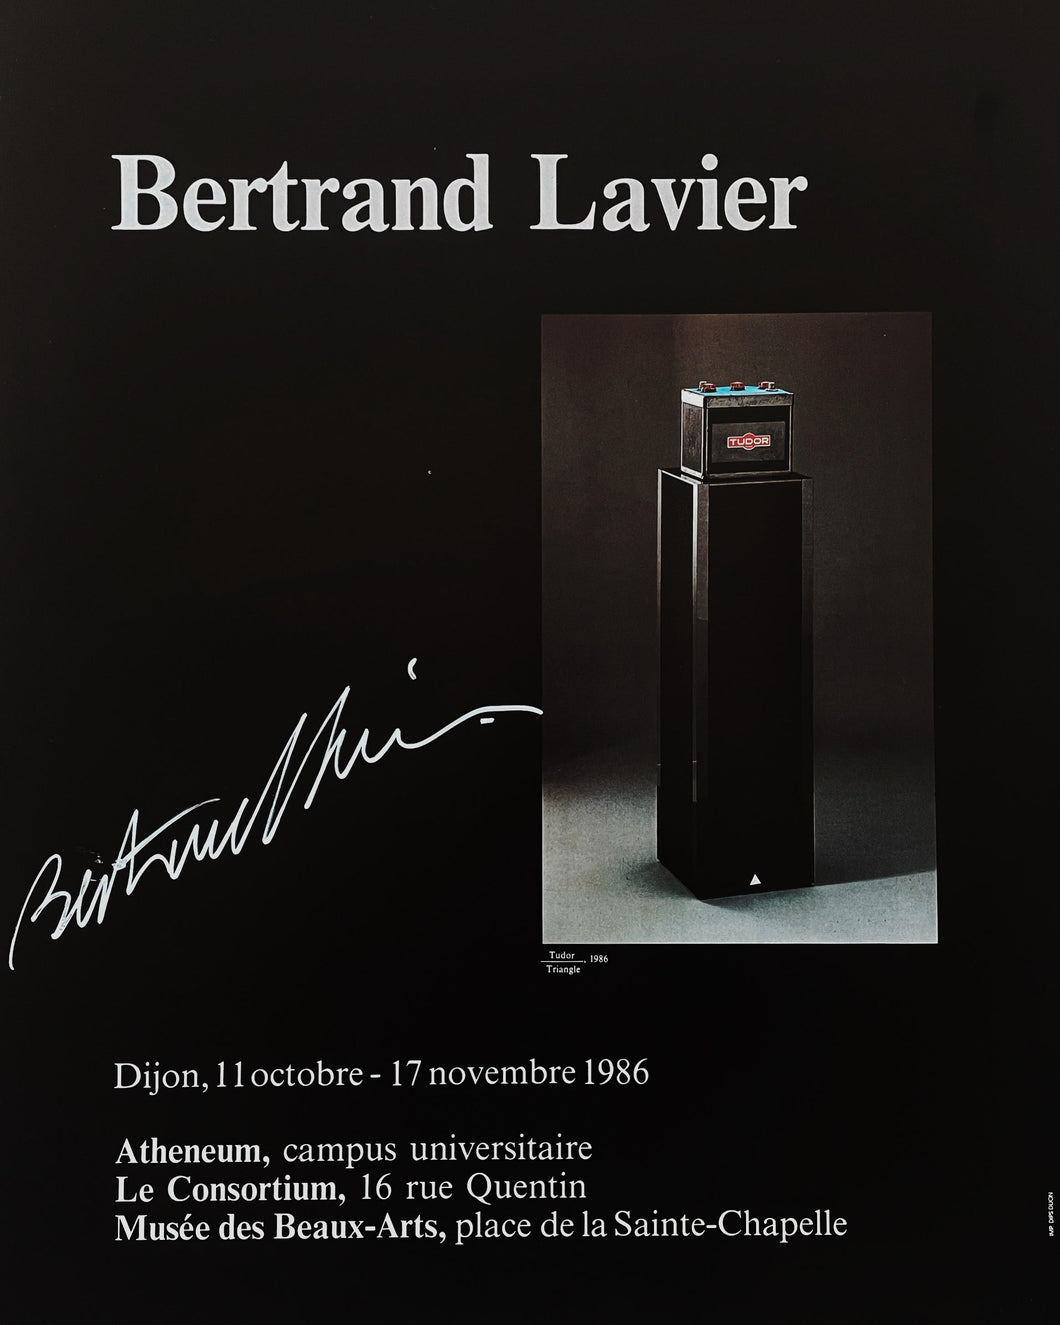 Bertrand Lavier, 1986